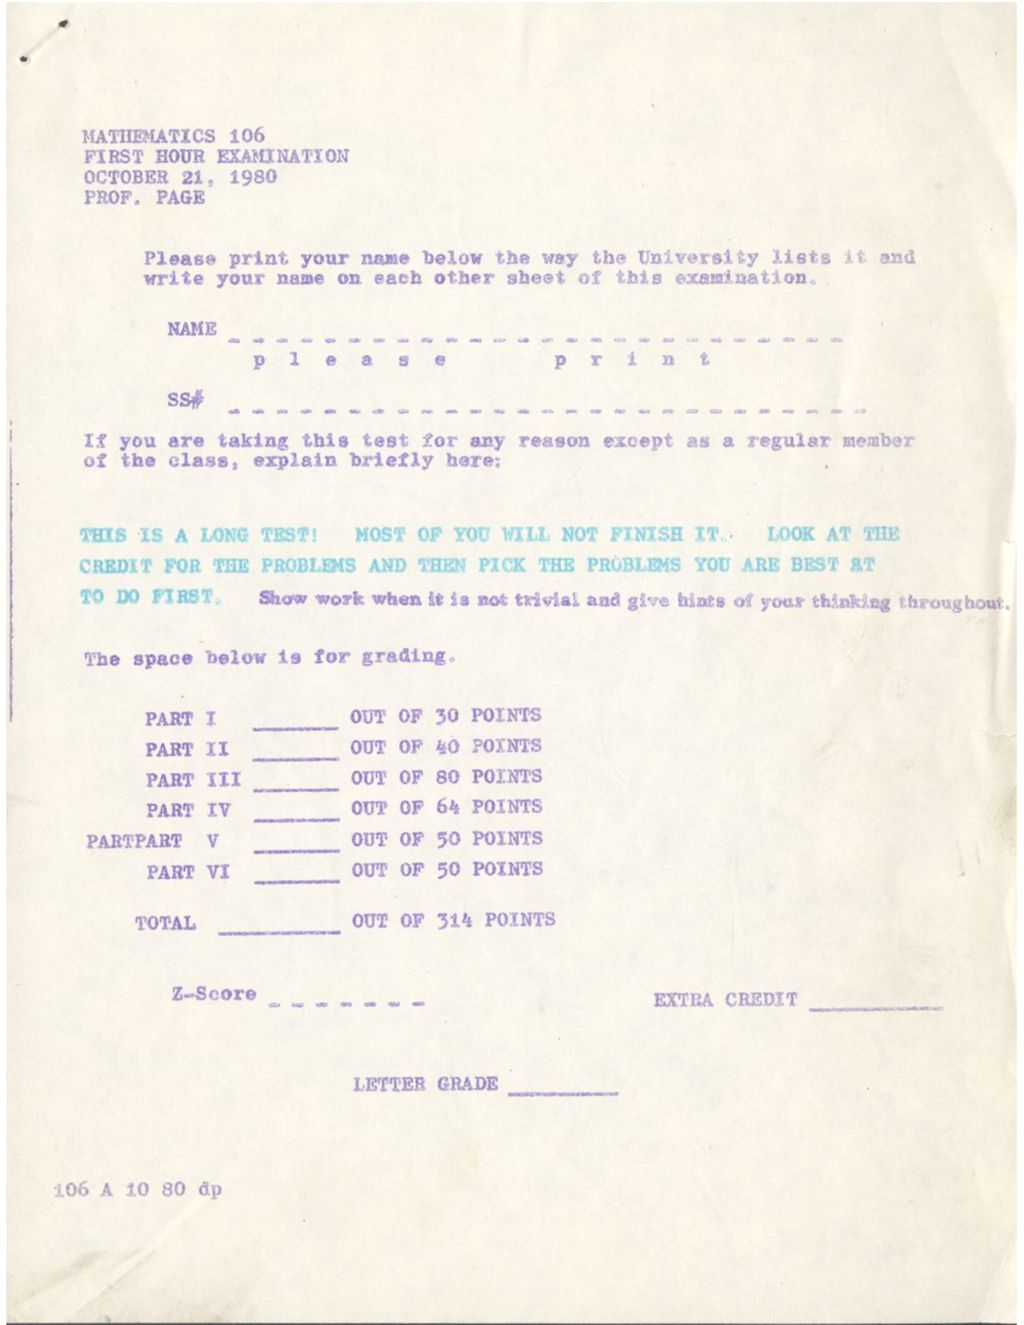 Math 106 First Hour Examination Oct. 21, 1980